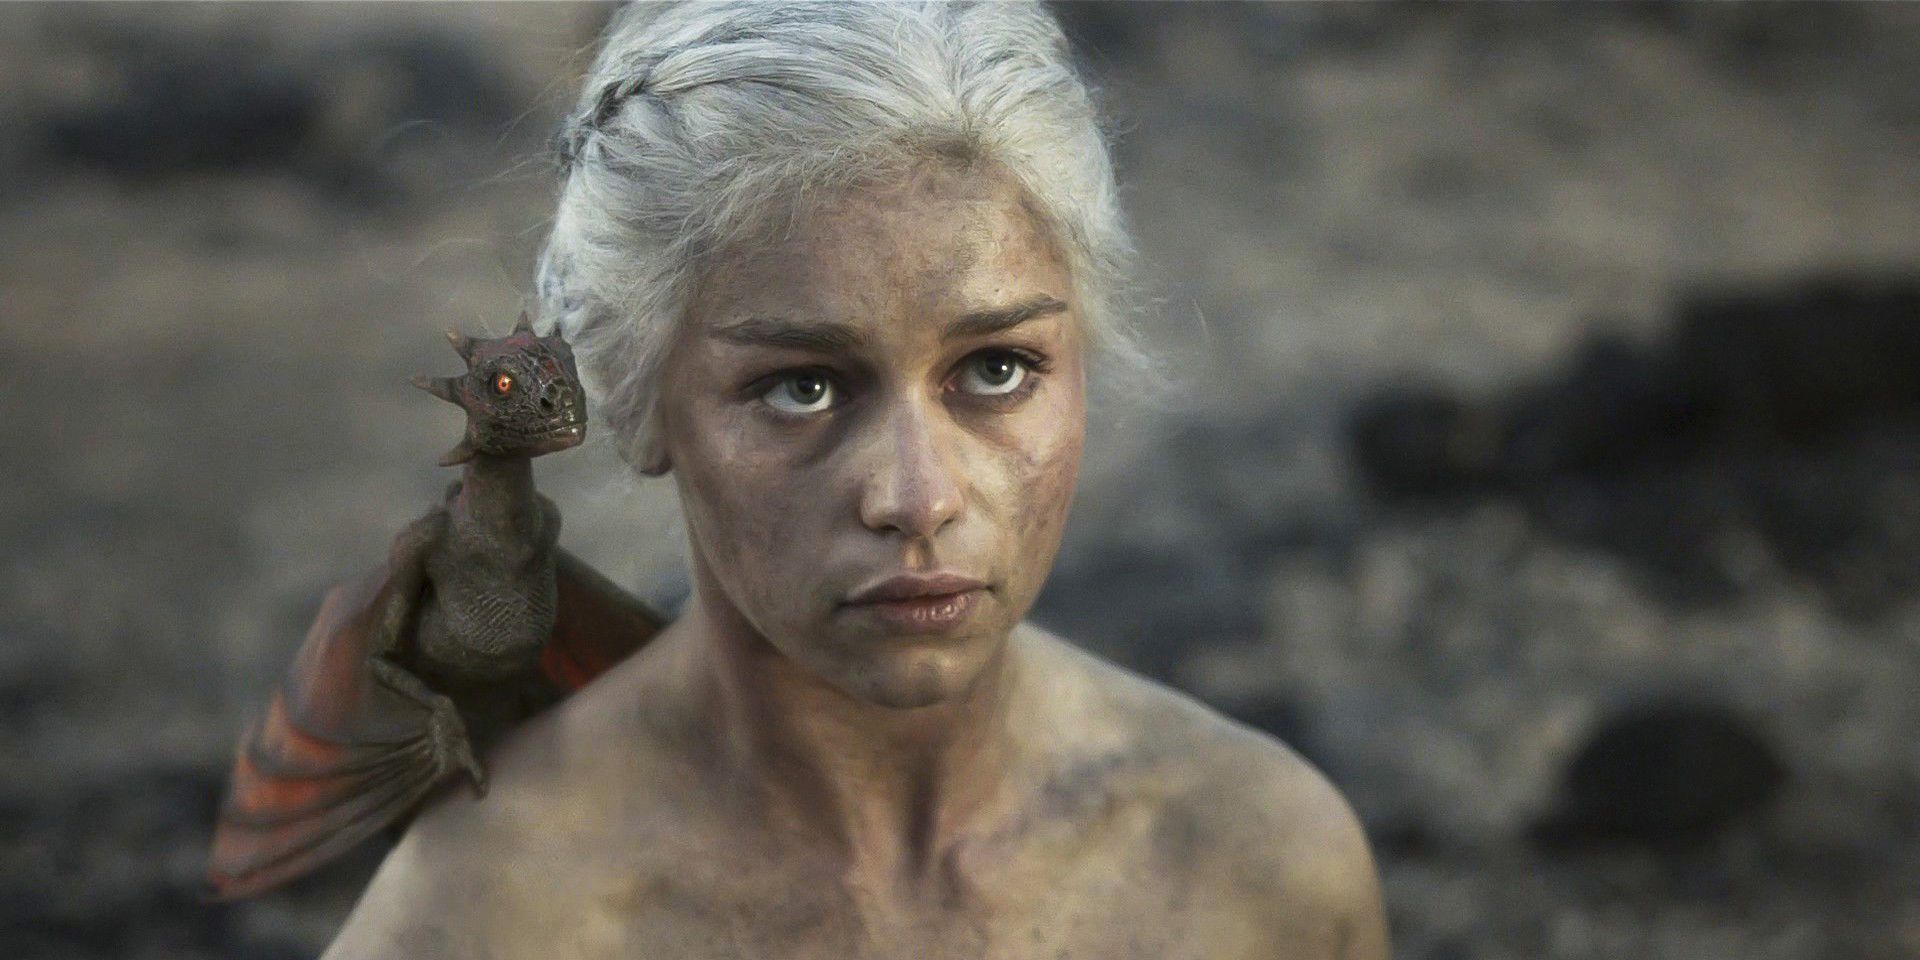 Daenerys Targaryen And Hatchling Drogon on HBO's Game of Thrones